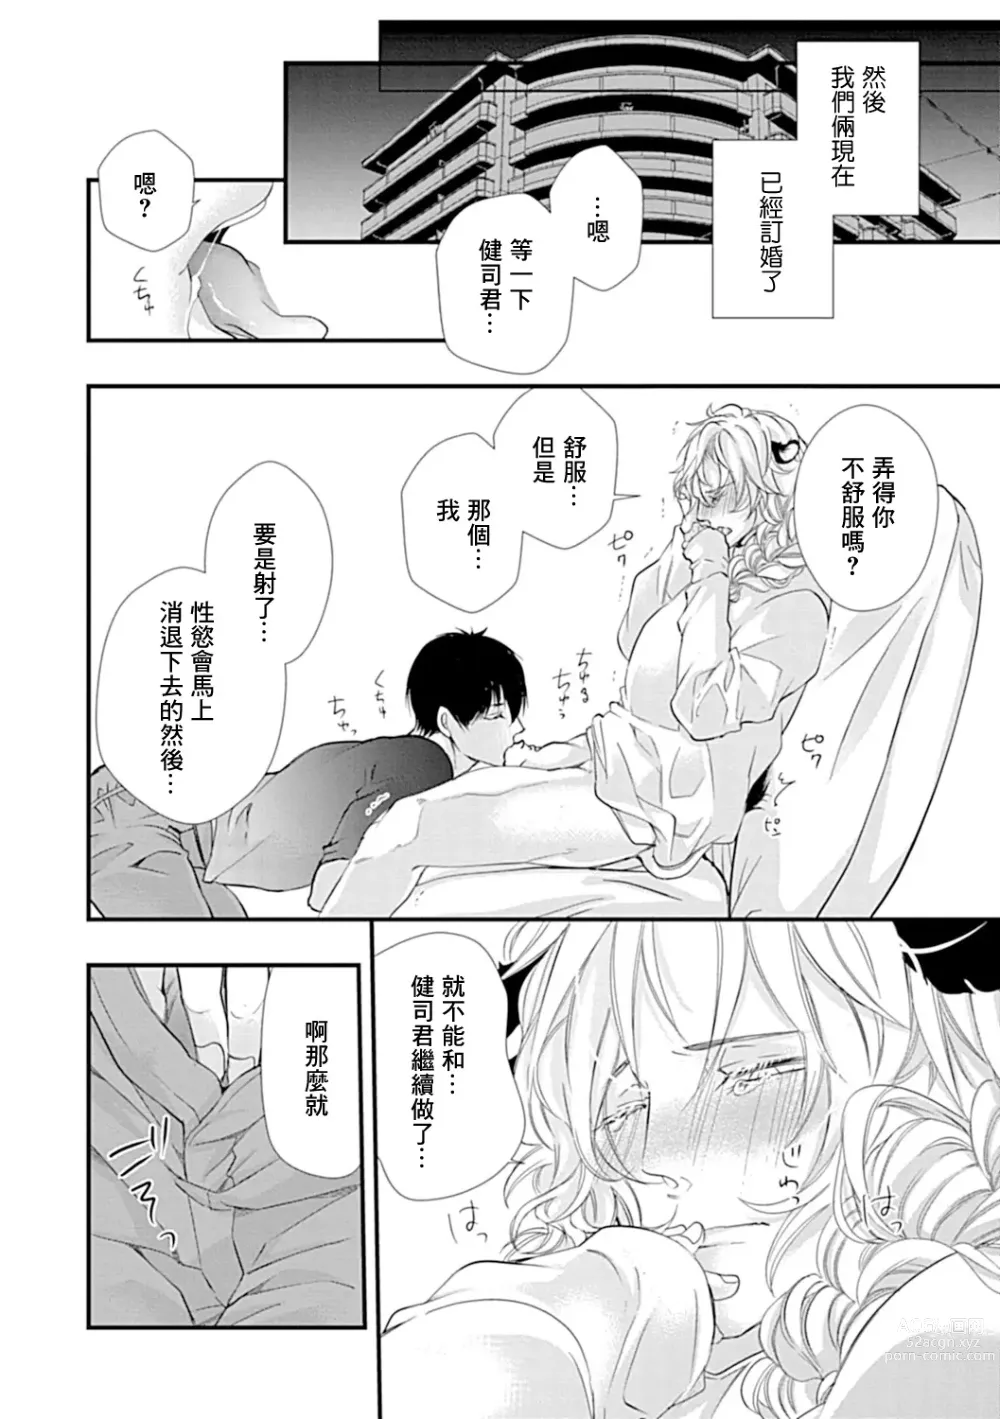 Page 3 of manga 异族婚姻BL